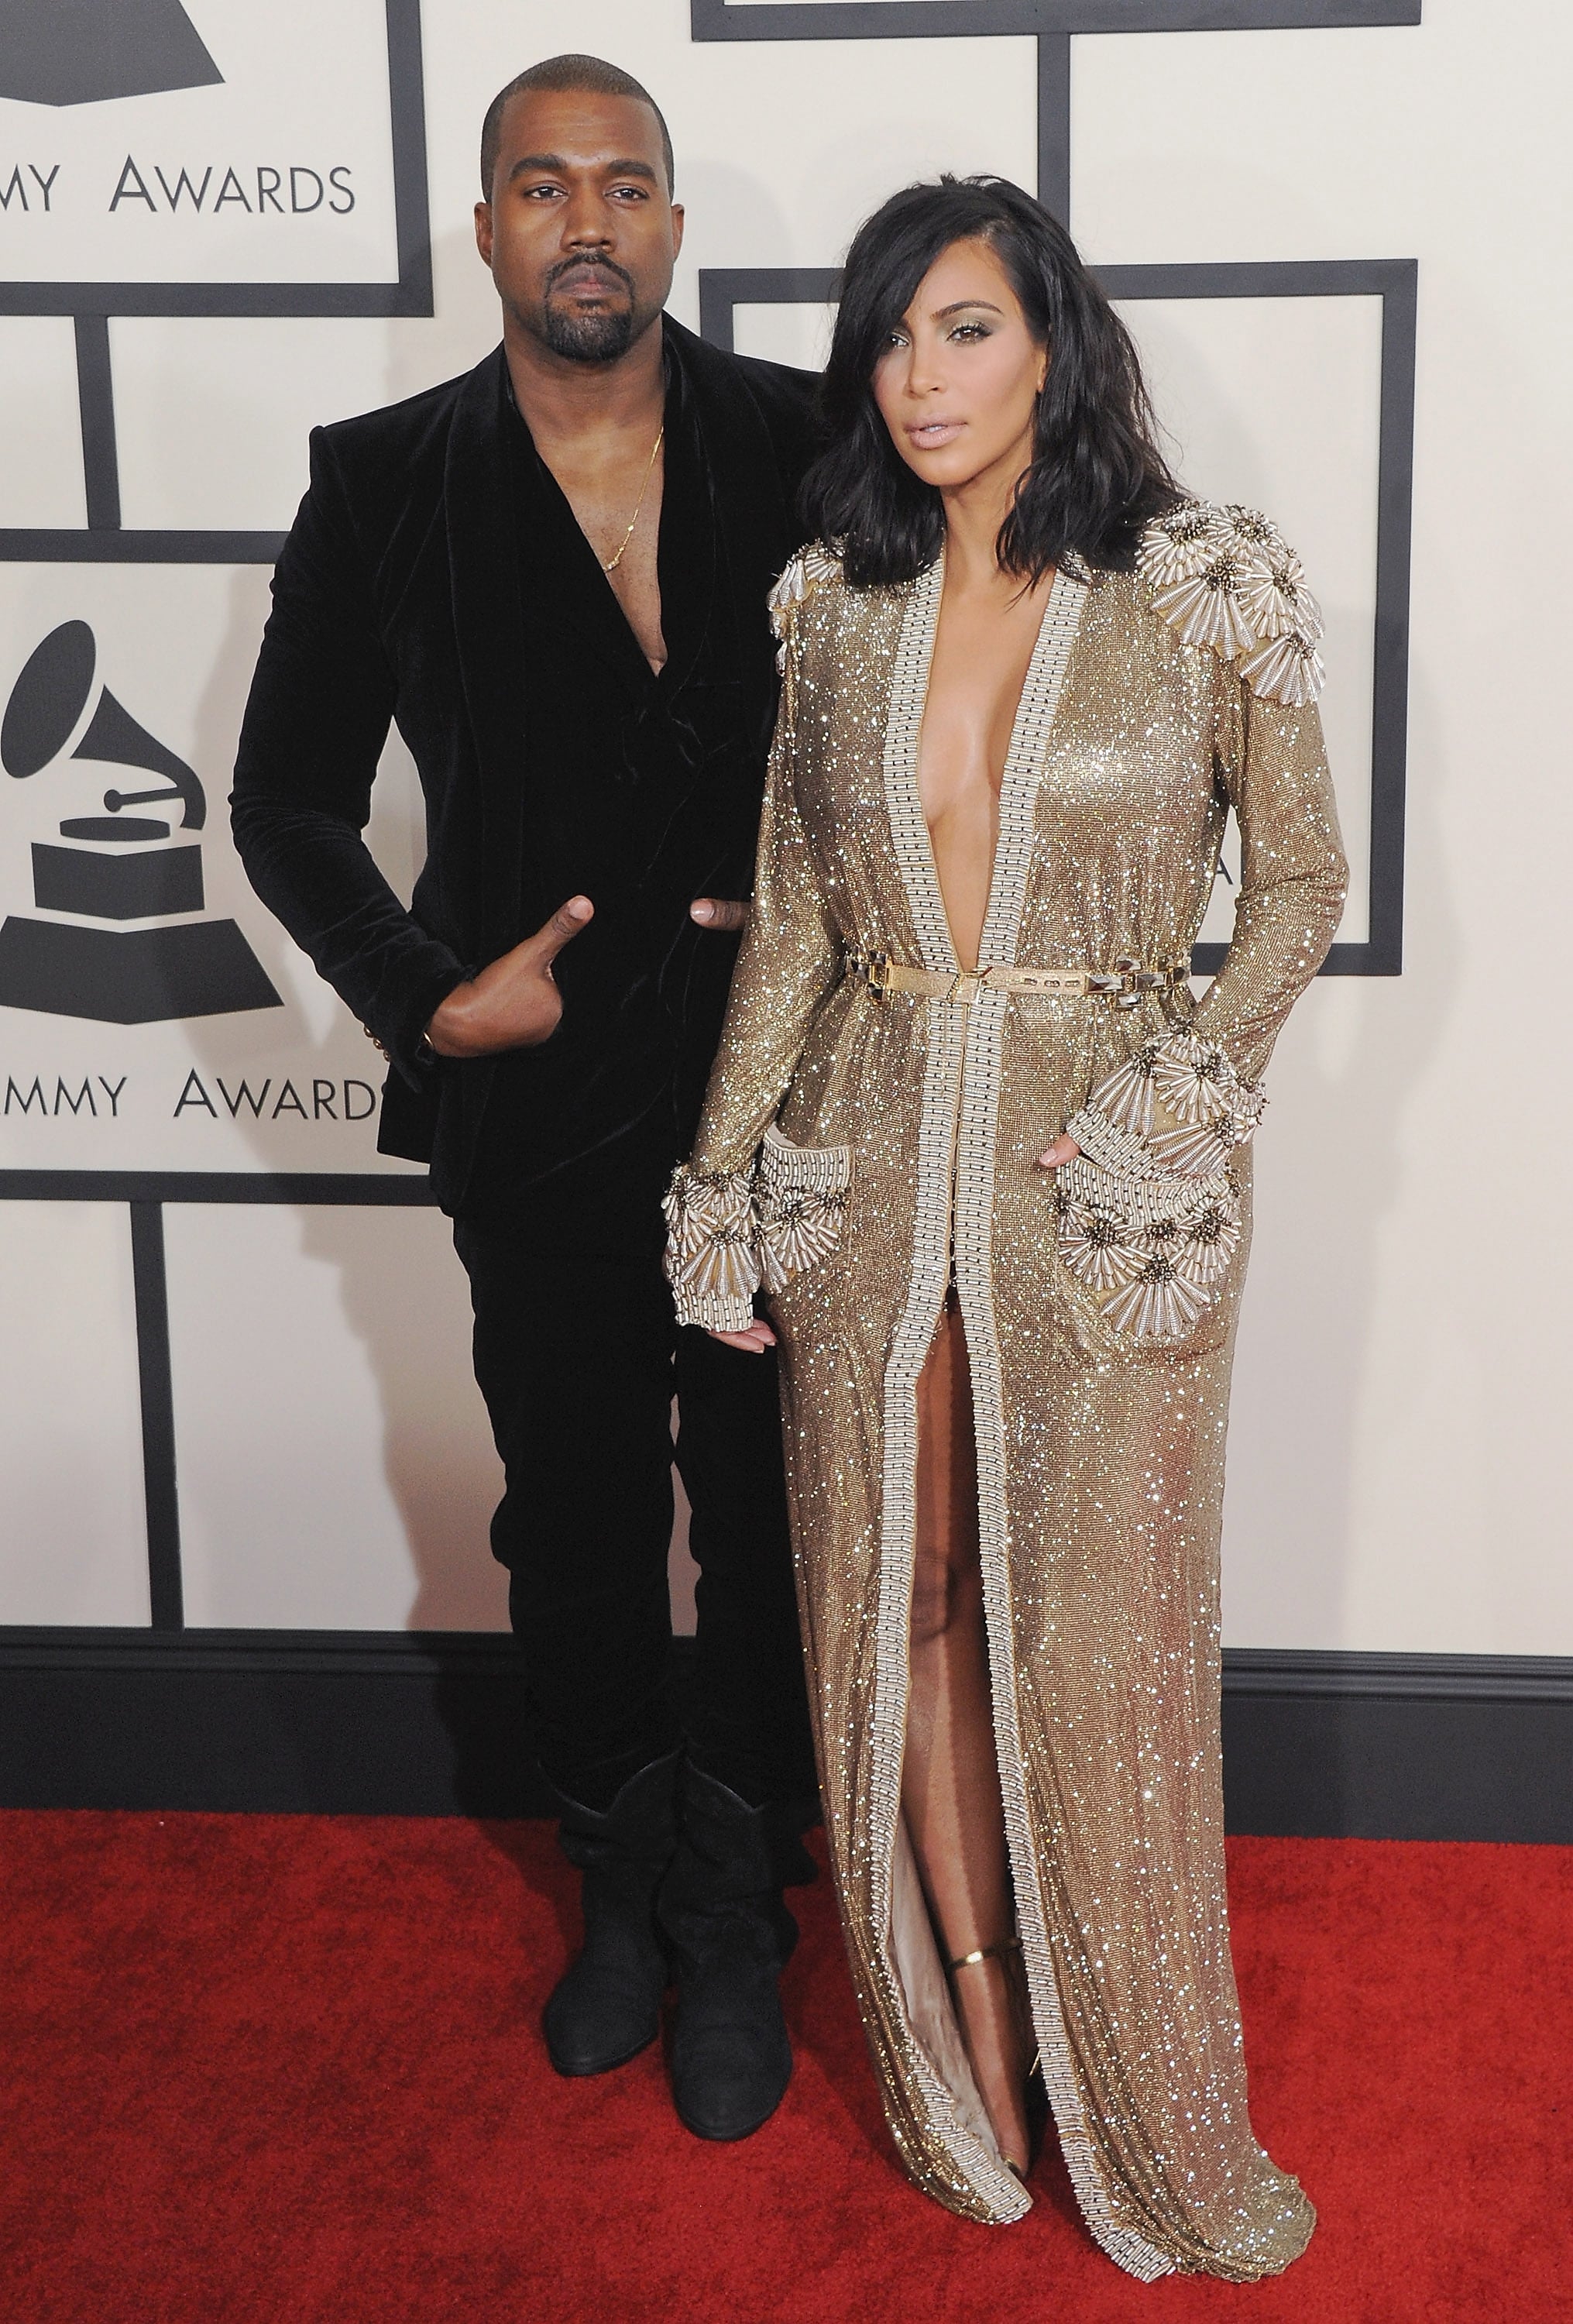 Kim Kardashian and Kanye West at the Grammy Awards in 2015